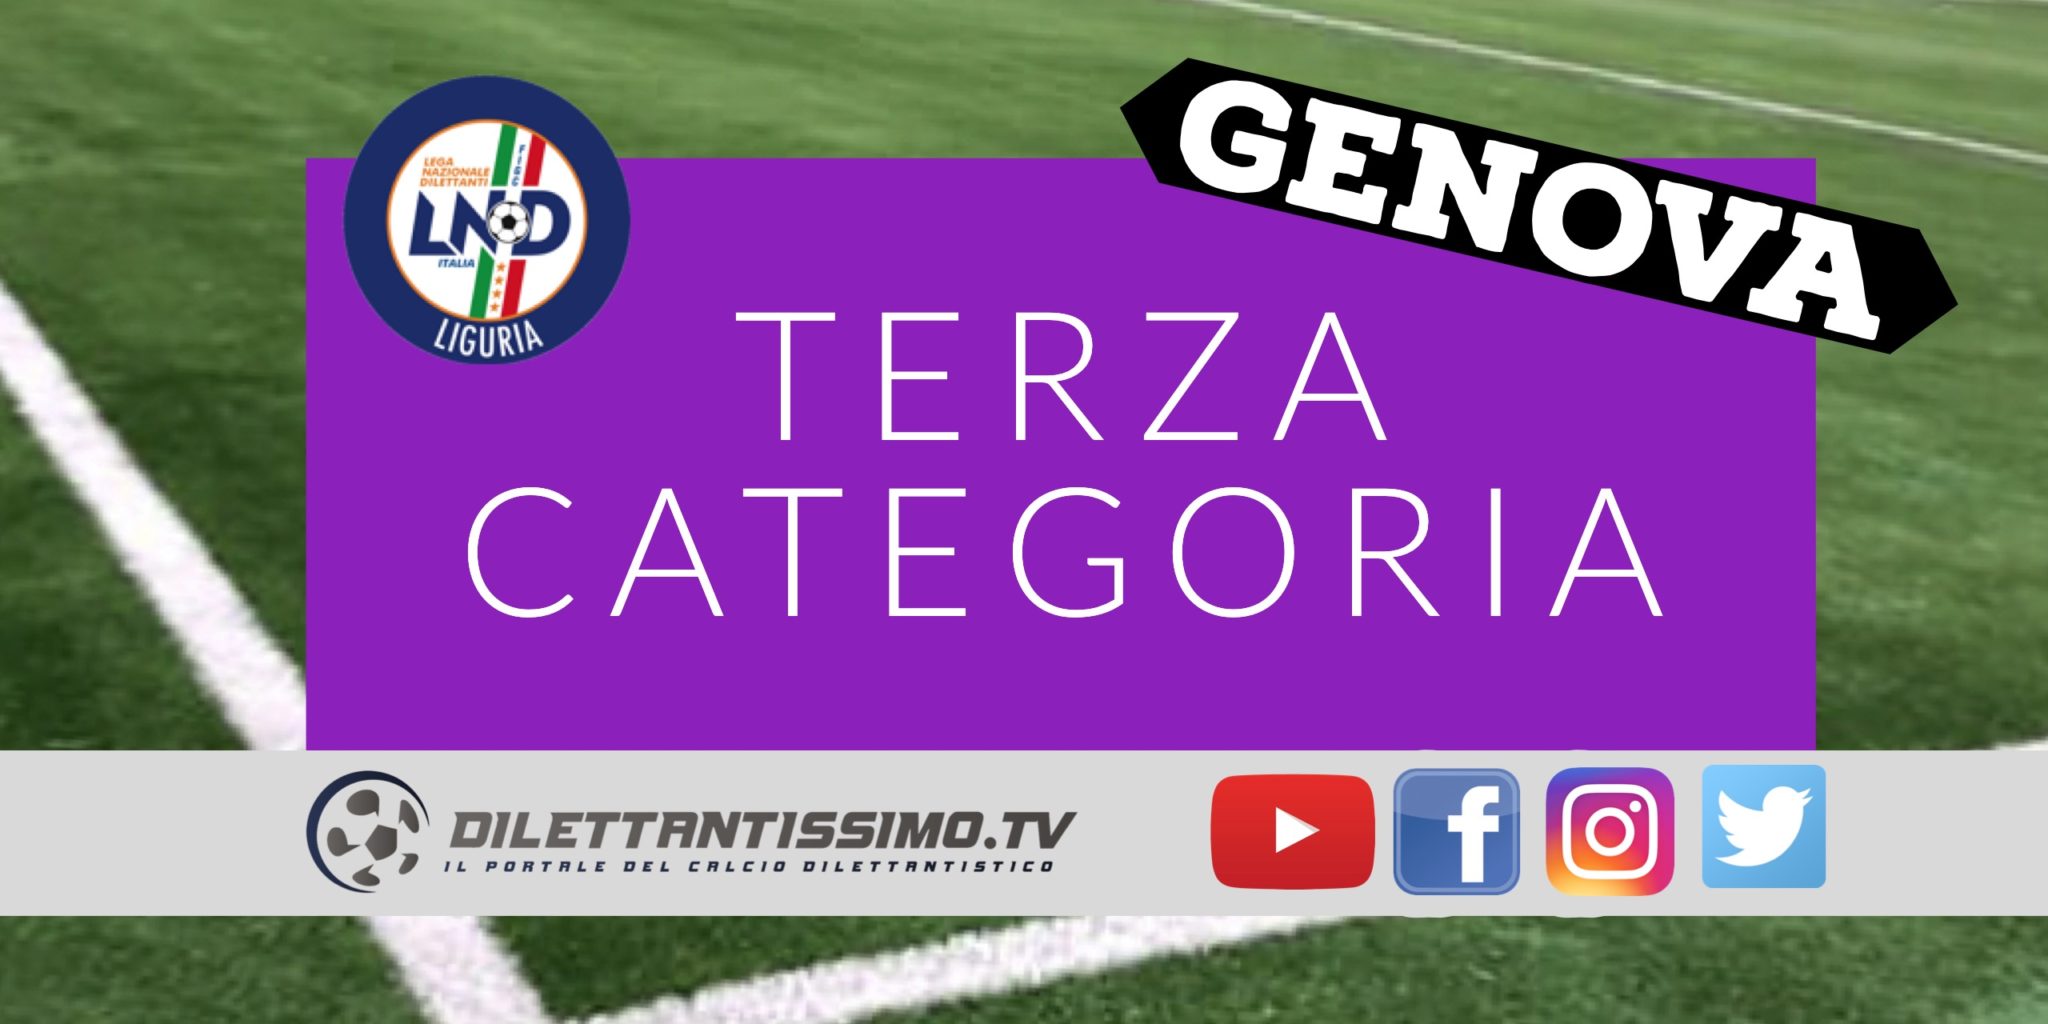 DIRETTA LIVE – Terza Categoria Genova, 12ª giornata